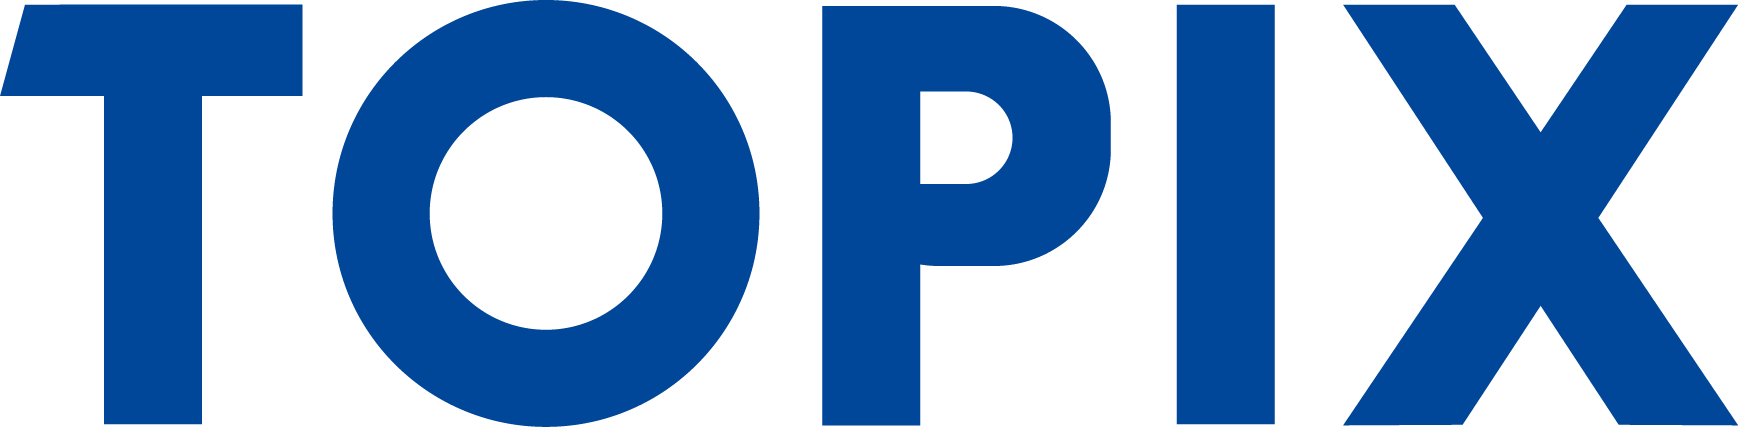 TOPIX Logo2